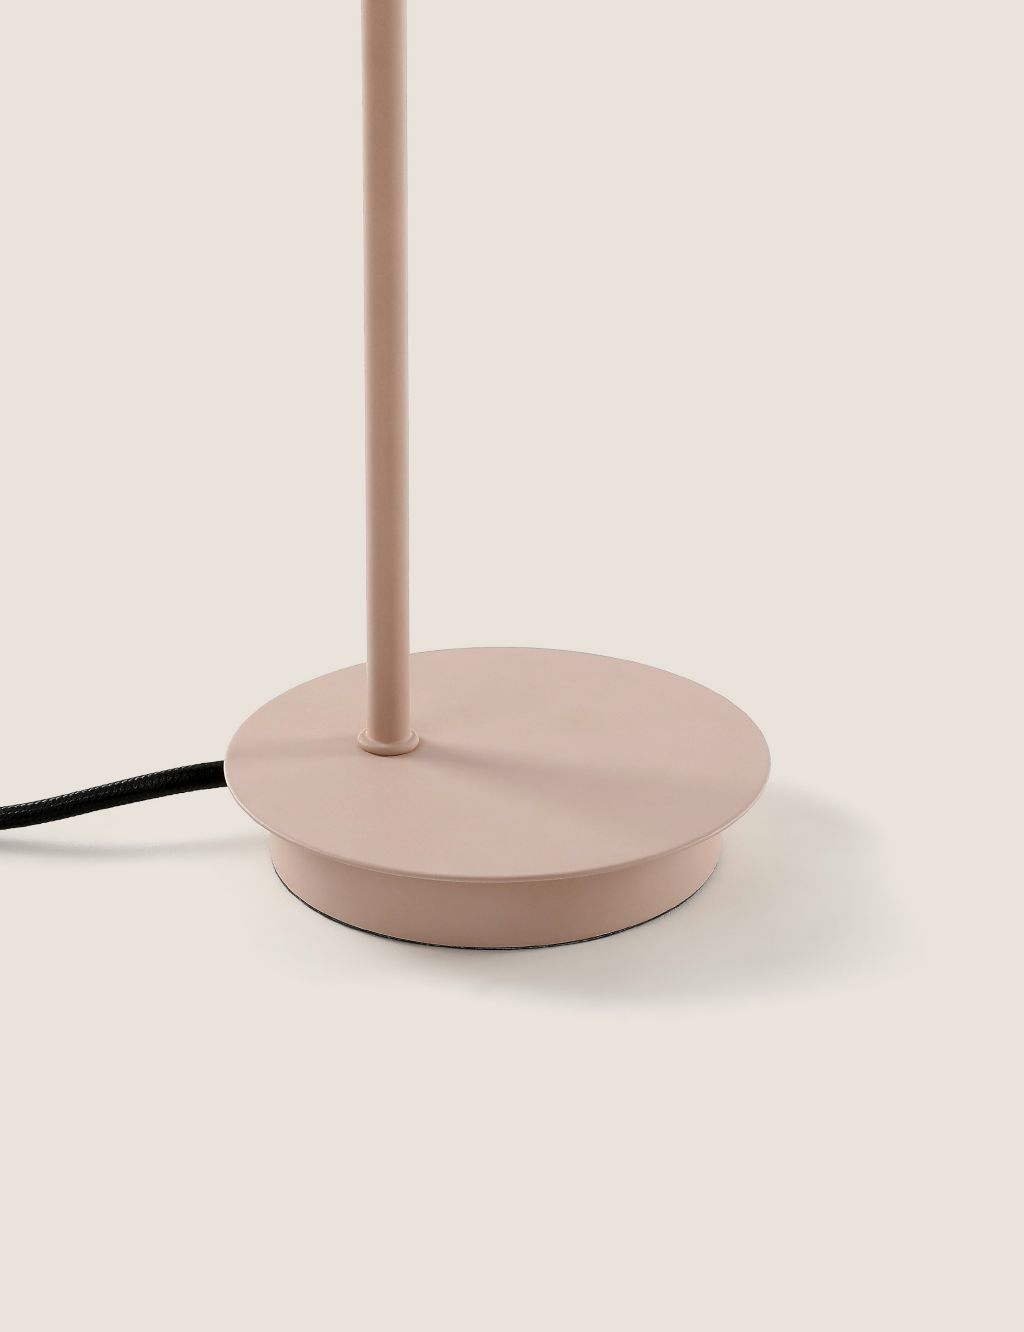 Finn Table Lamp image 4